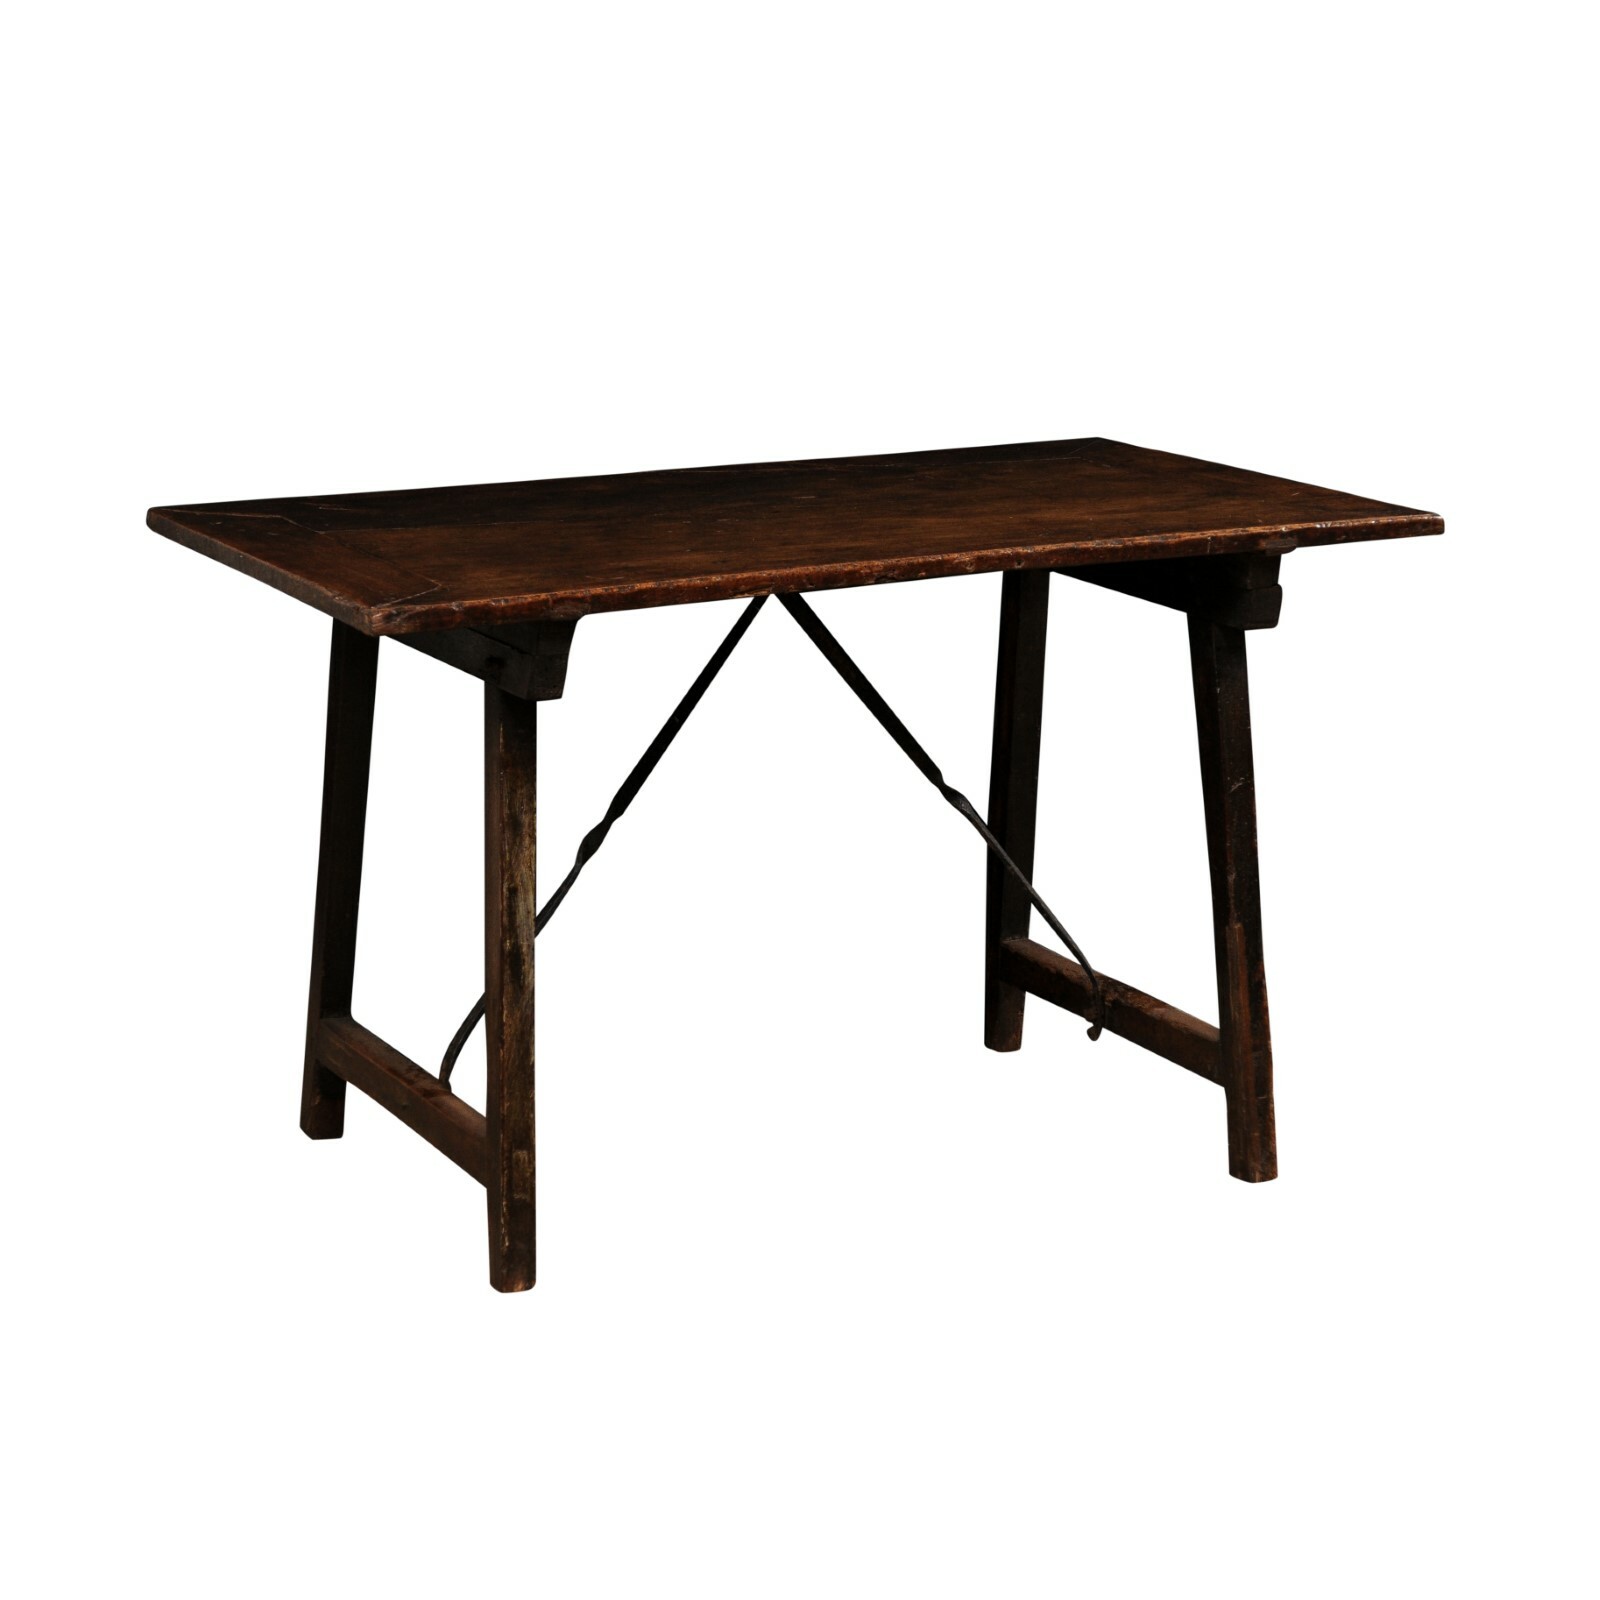 18th C. Italian Walnut Table (or Desk) 4 Ft